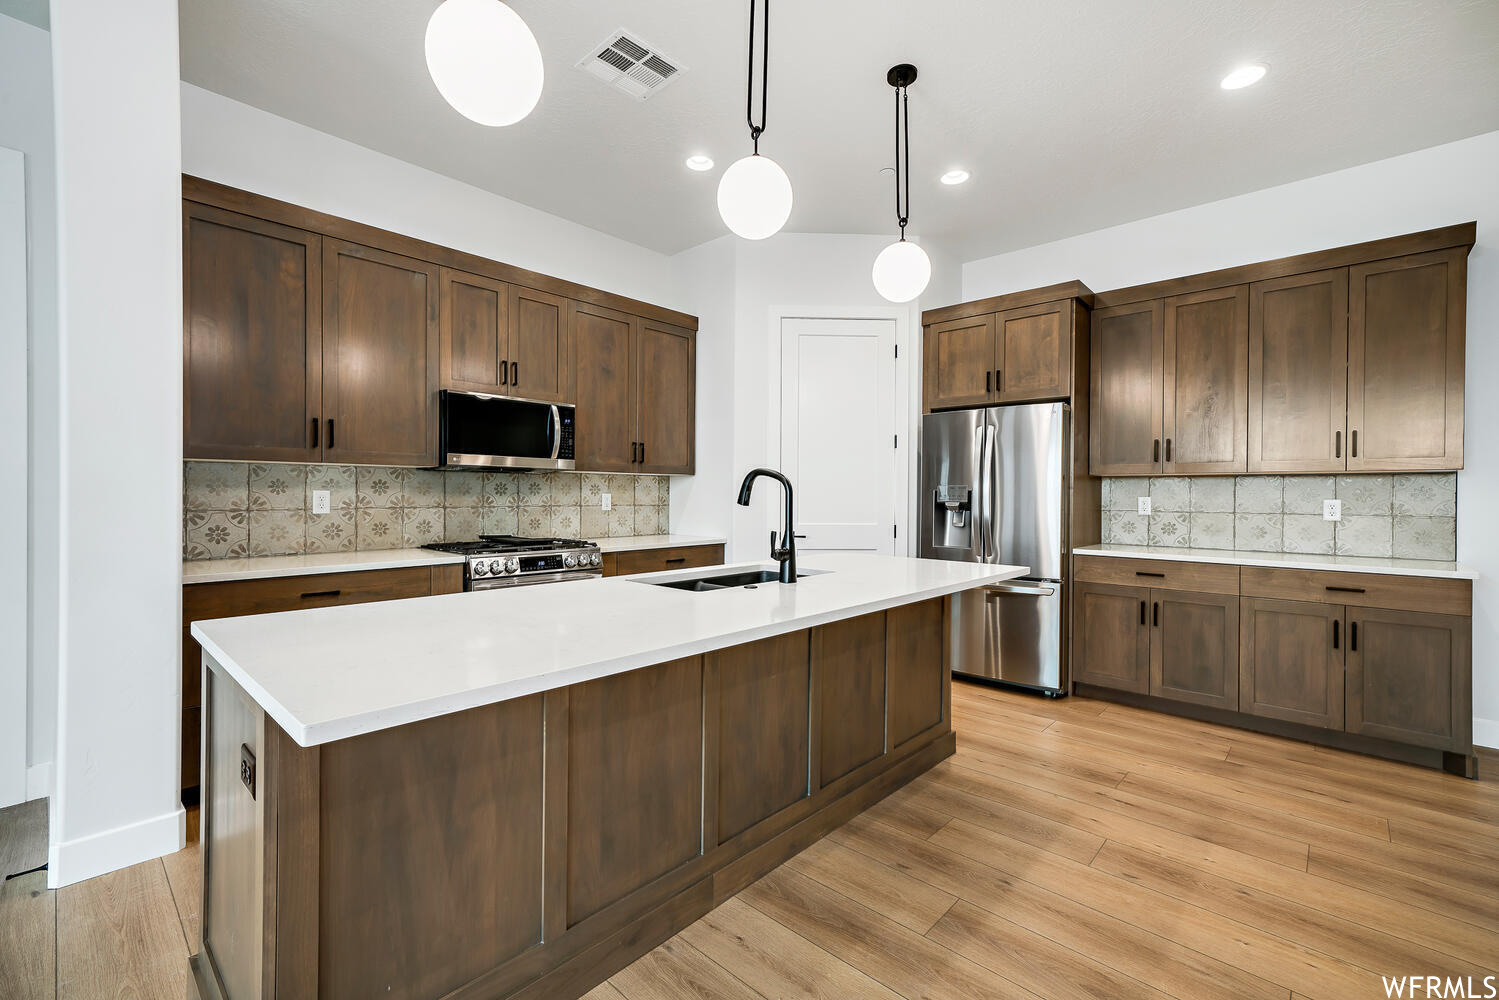 Kitchen featuring refrigerator, range oven, microwave, pendant lighting, light hardwood floors, and light countertops